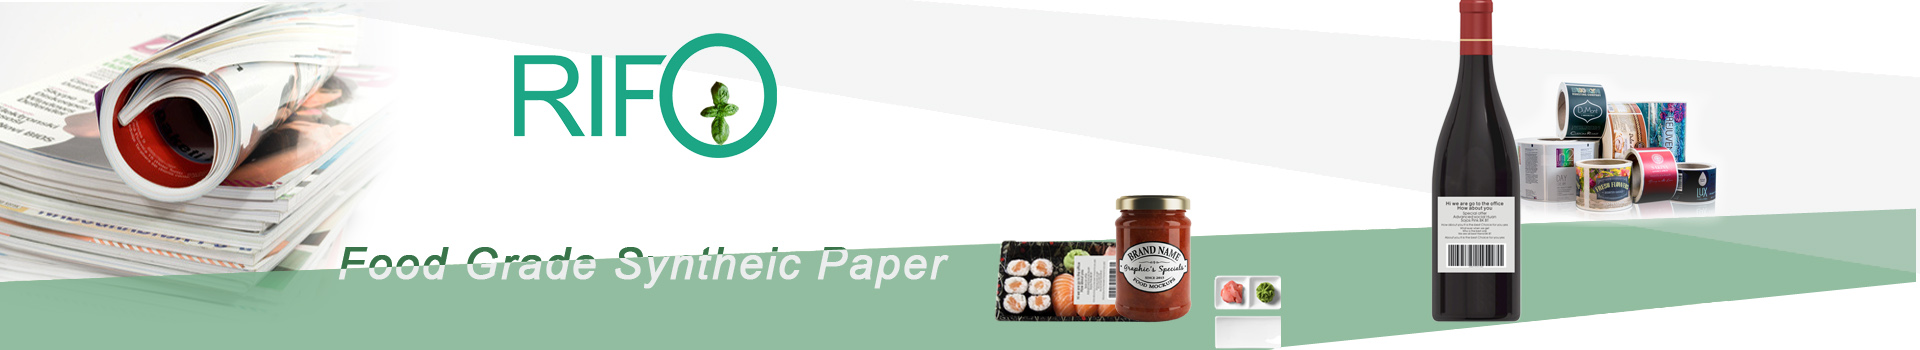 Rifo Packaging Material Co., Ltd